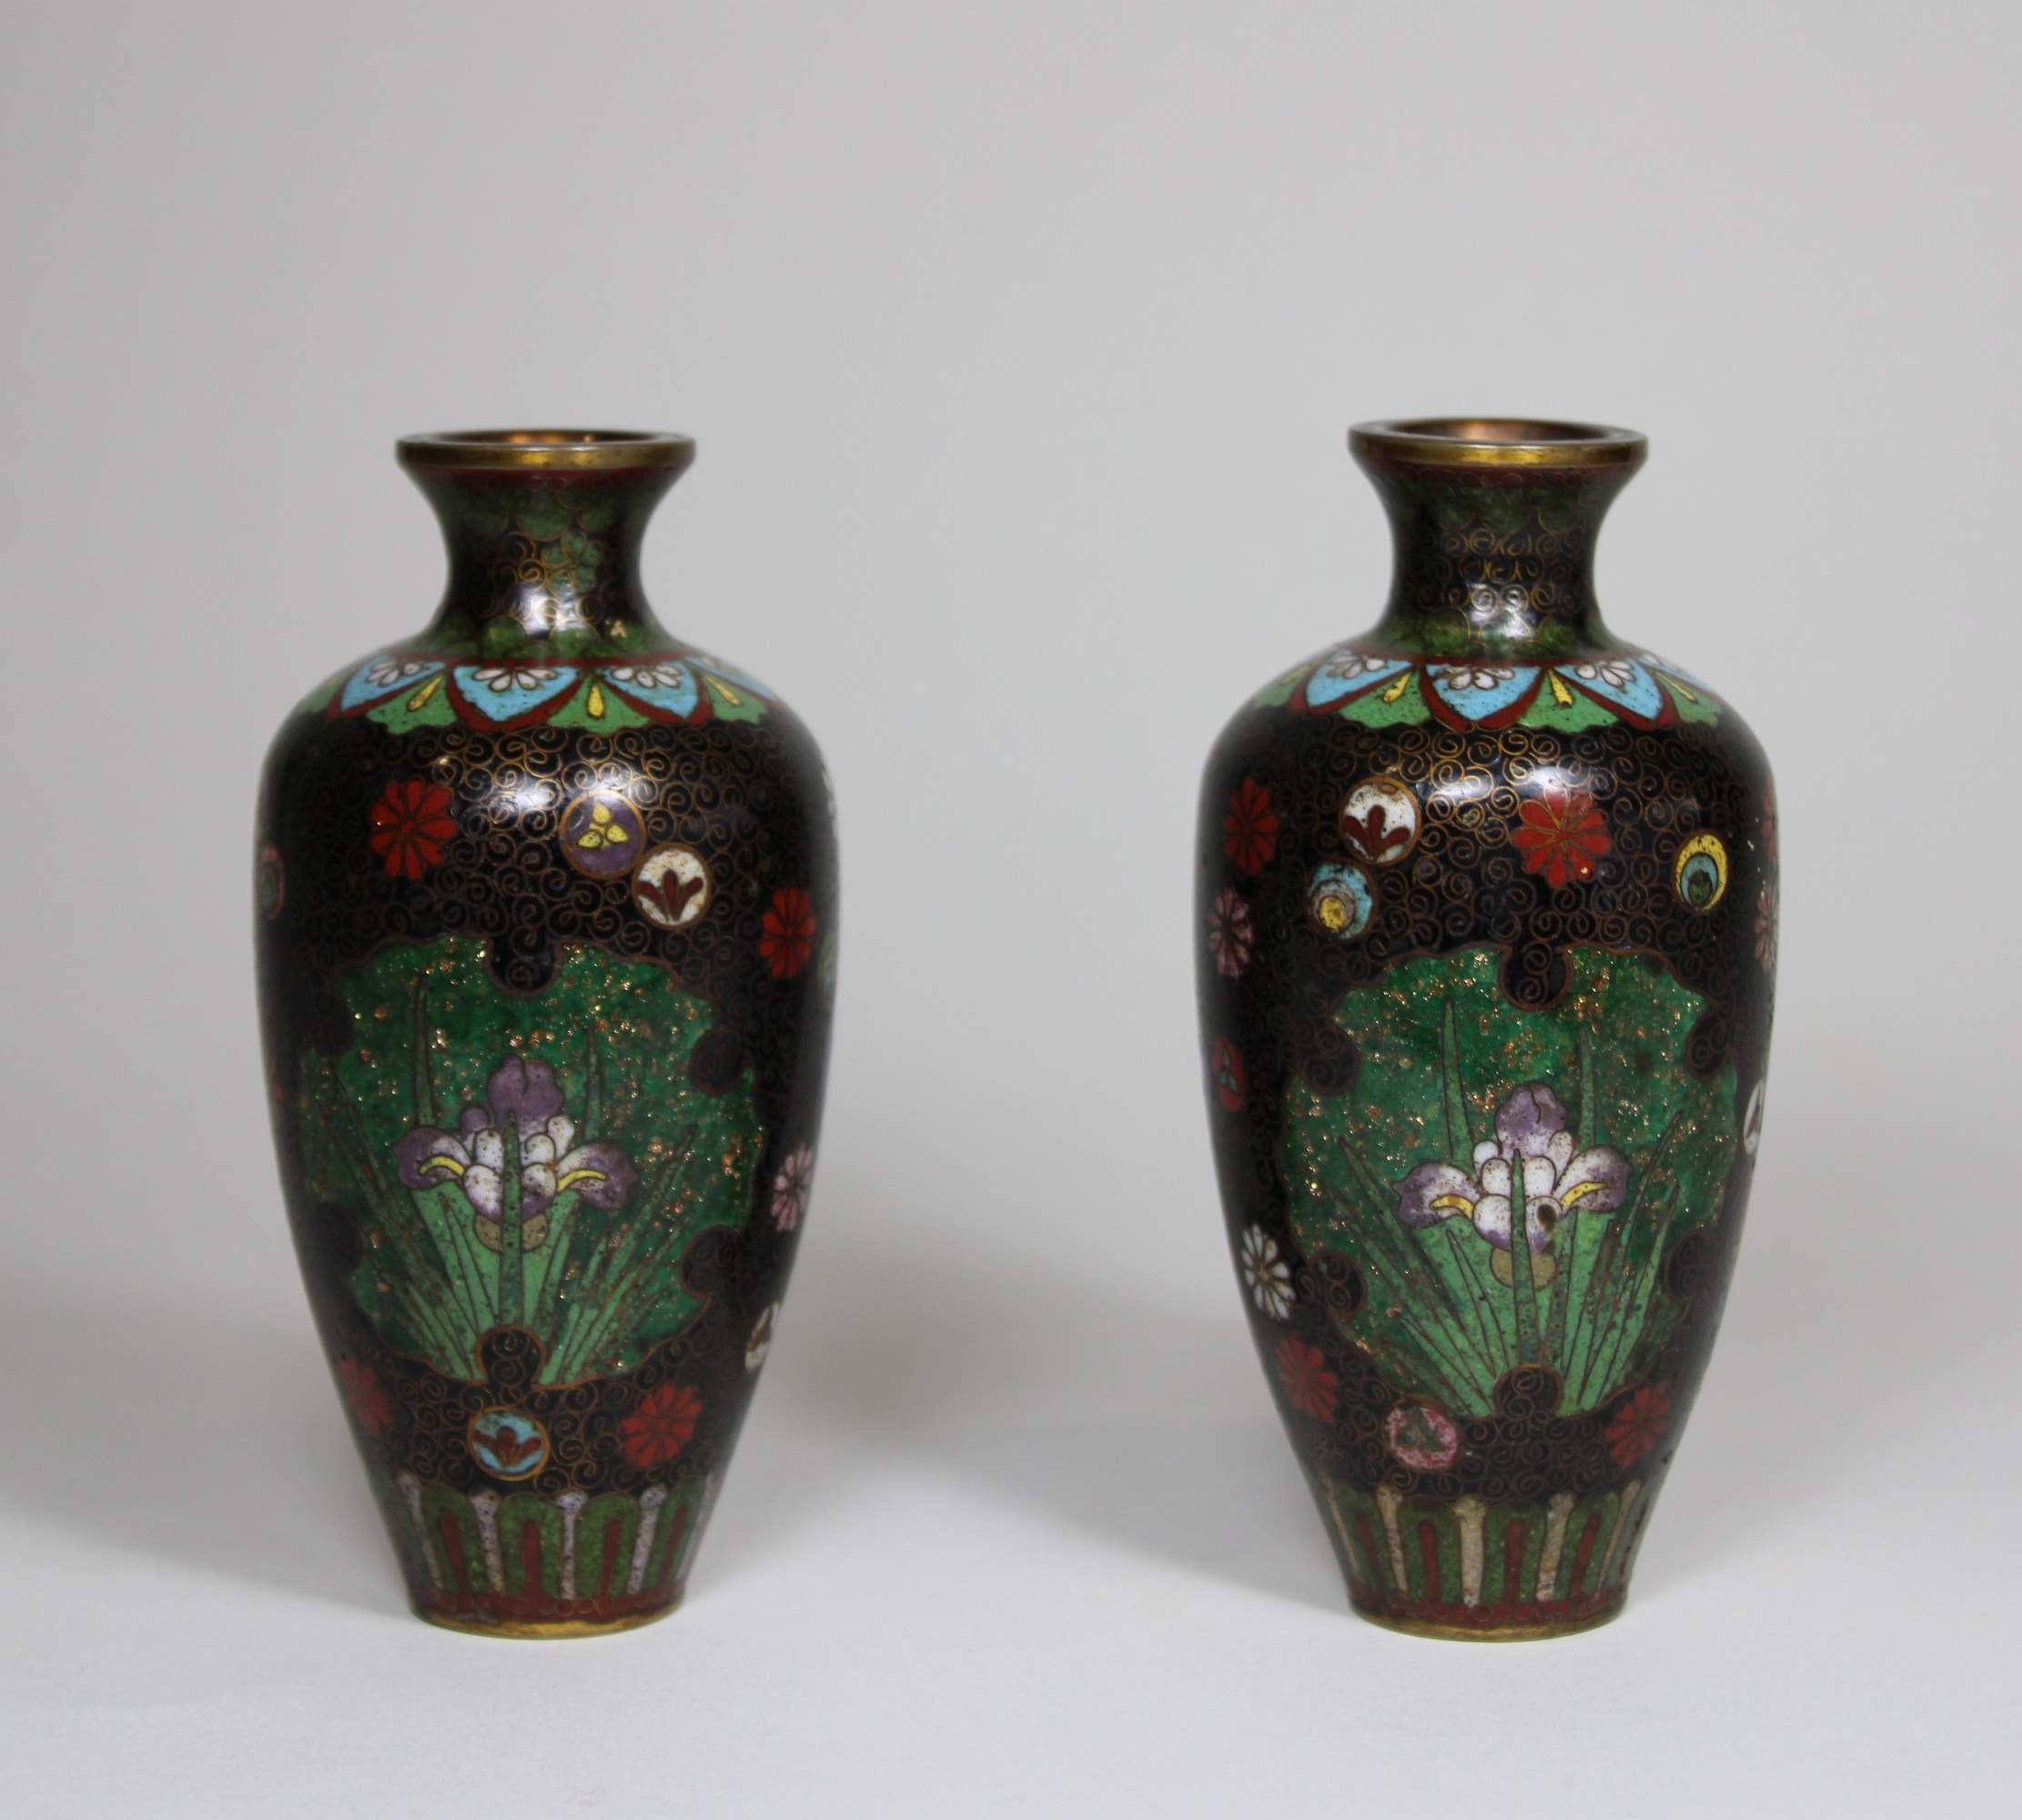 Paar Vasen, China, 18. Jh., Cloisonne, im originalen Etui. - Image 5 of 5